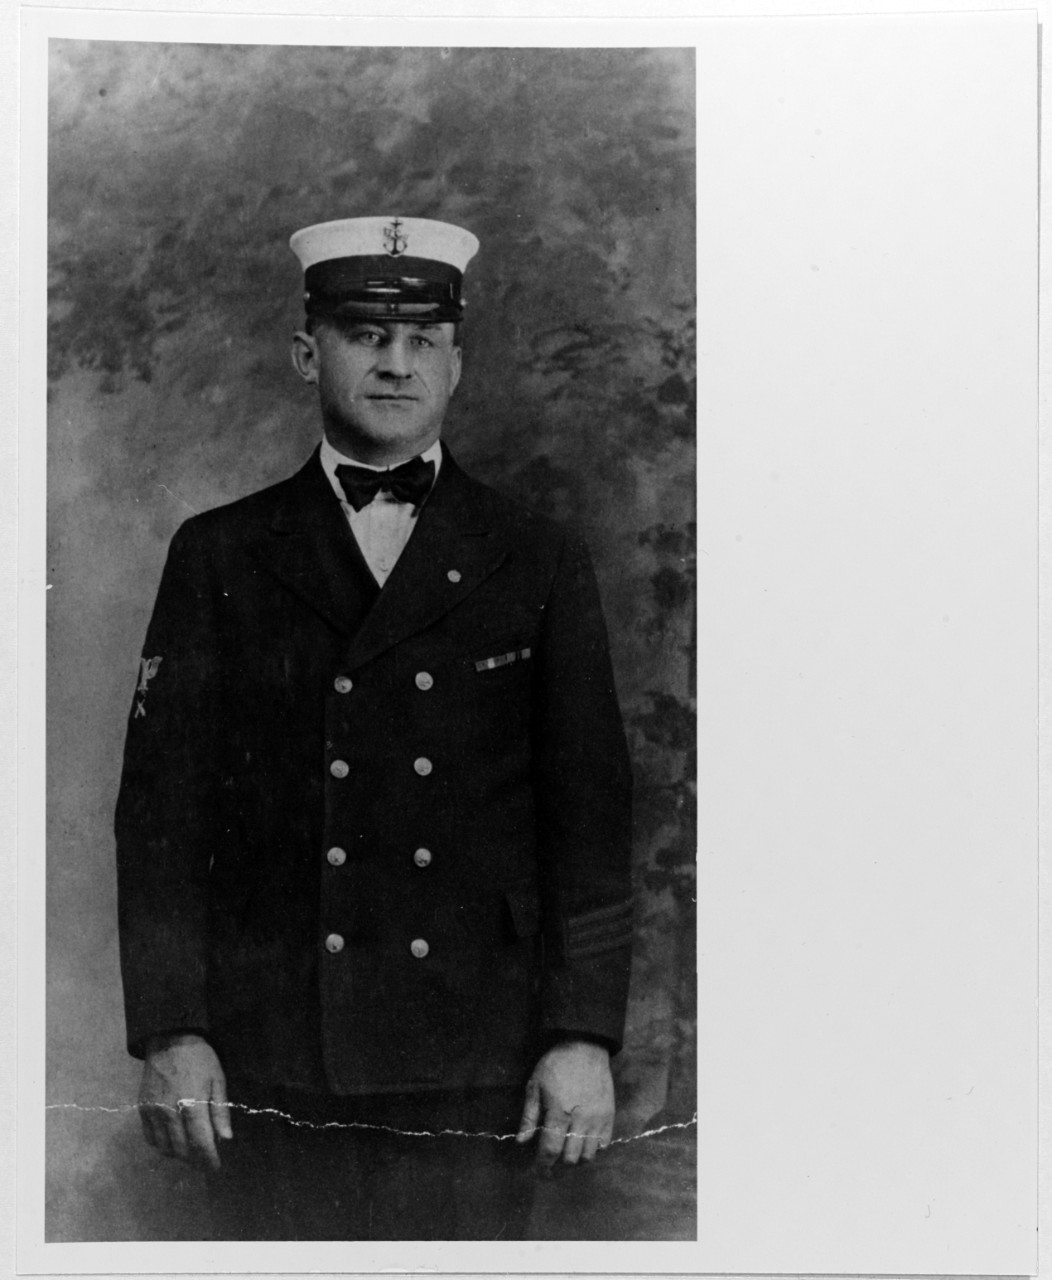 John P. Conroy, Chief Petty Officer, USN